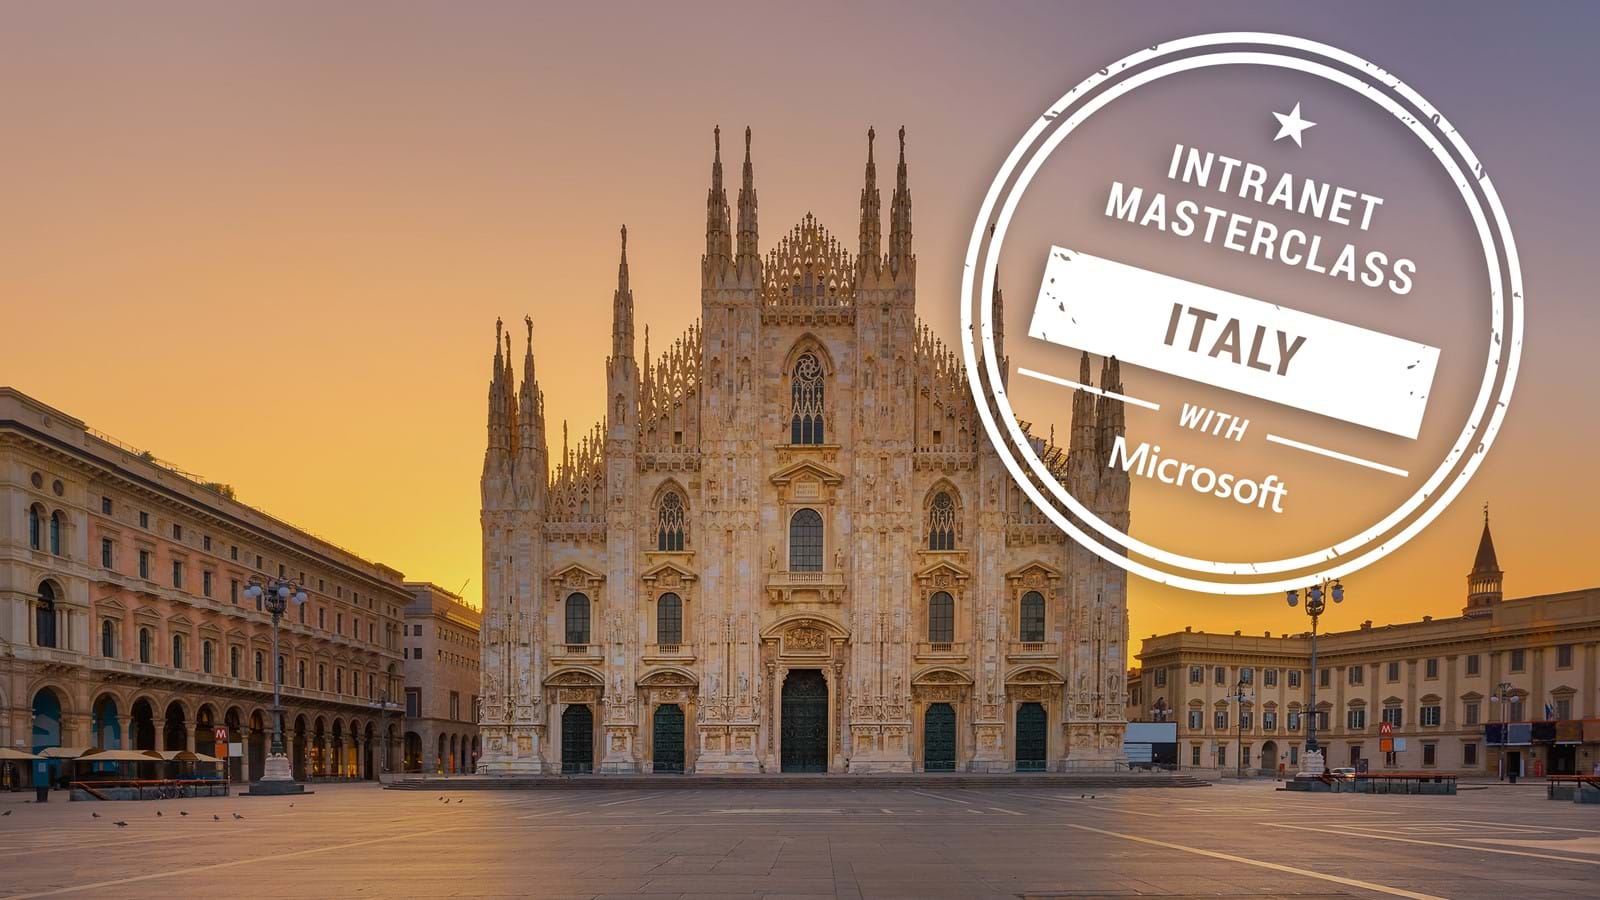 FREE Virtual Intranet Masterclass - Italy